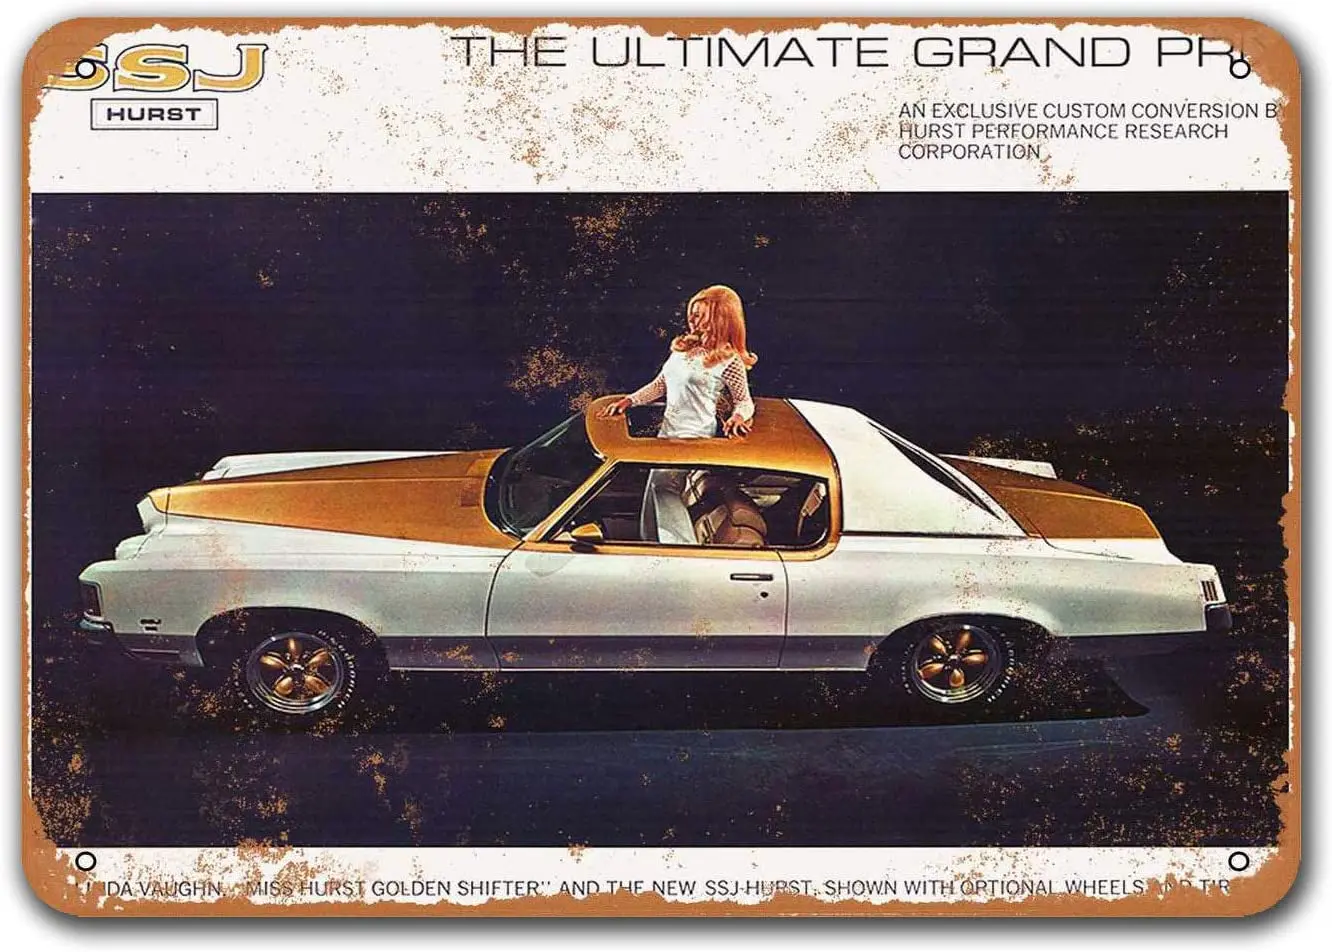 

1971 Pontiac Grand Prix Car Tin Signs Vintage, Sisoso Metal Plaques Poster Bar Pub Retro Wall Decor 12x8 inch